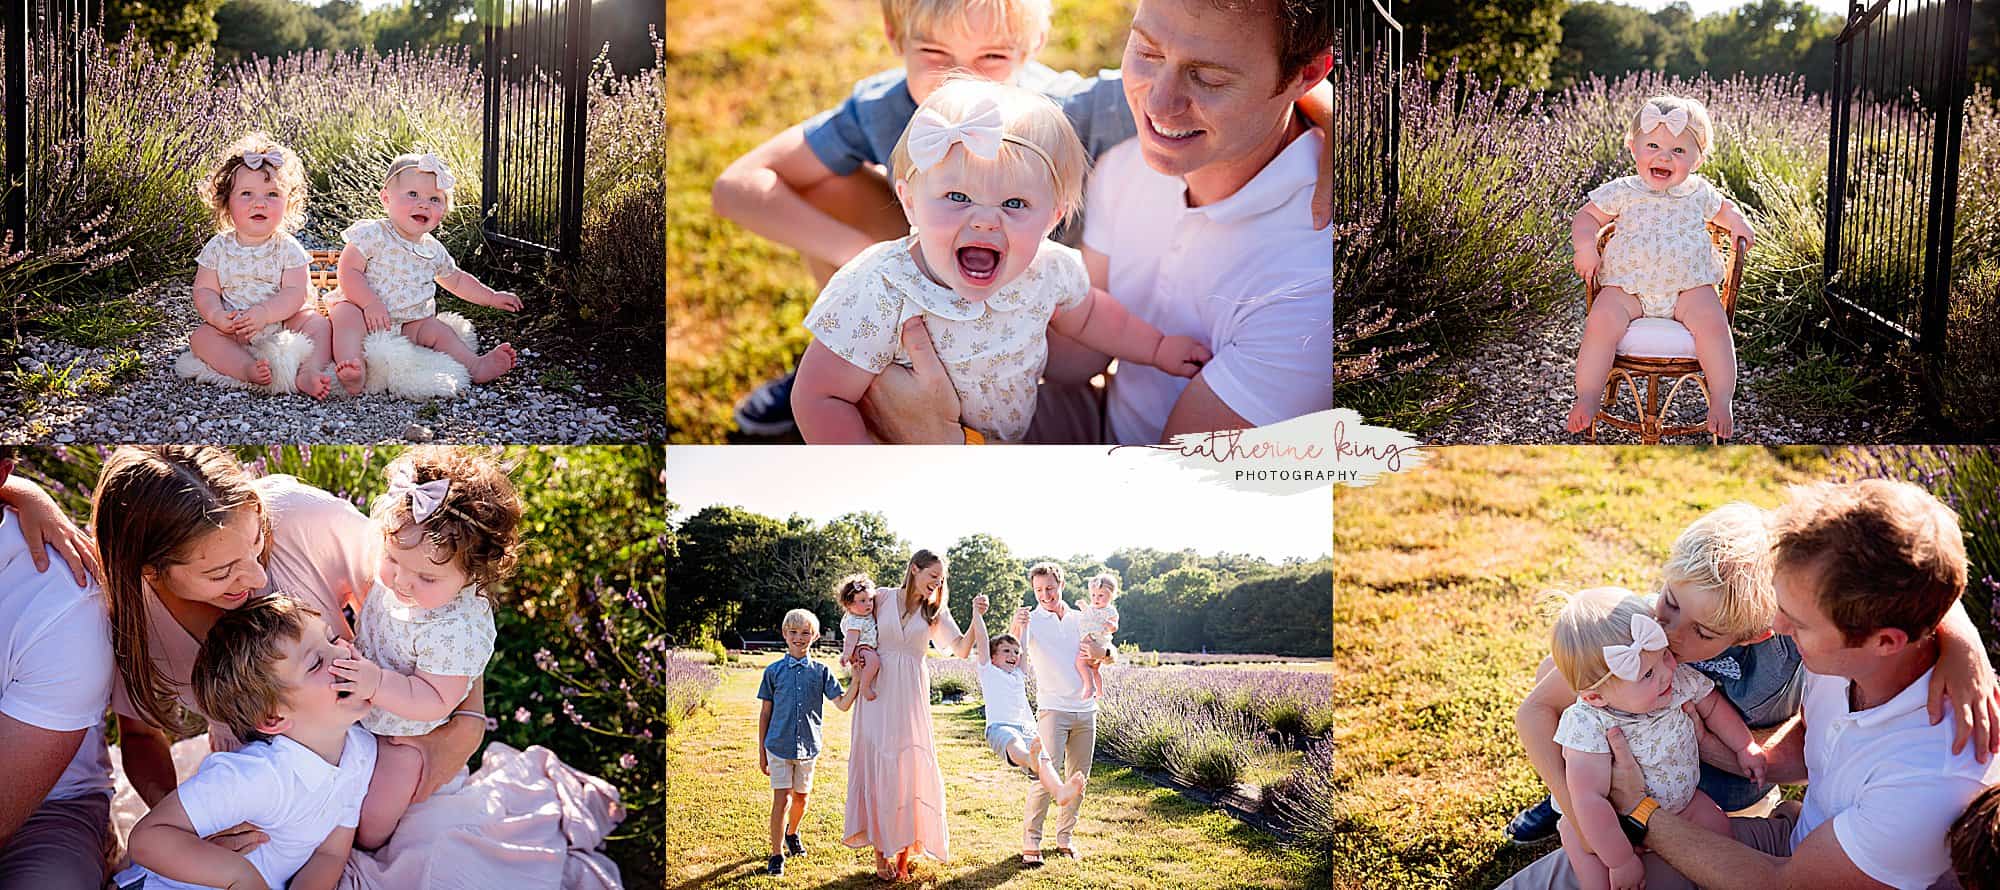 2022 Lavender Pond Farm family photo session in Killingworth CT